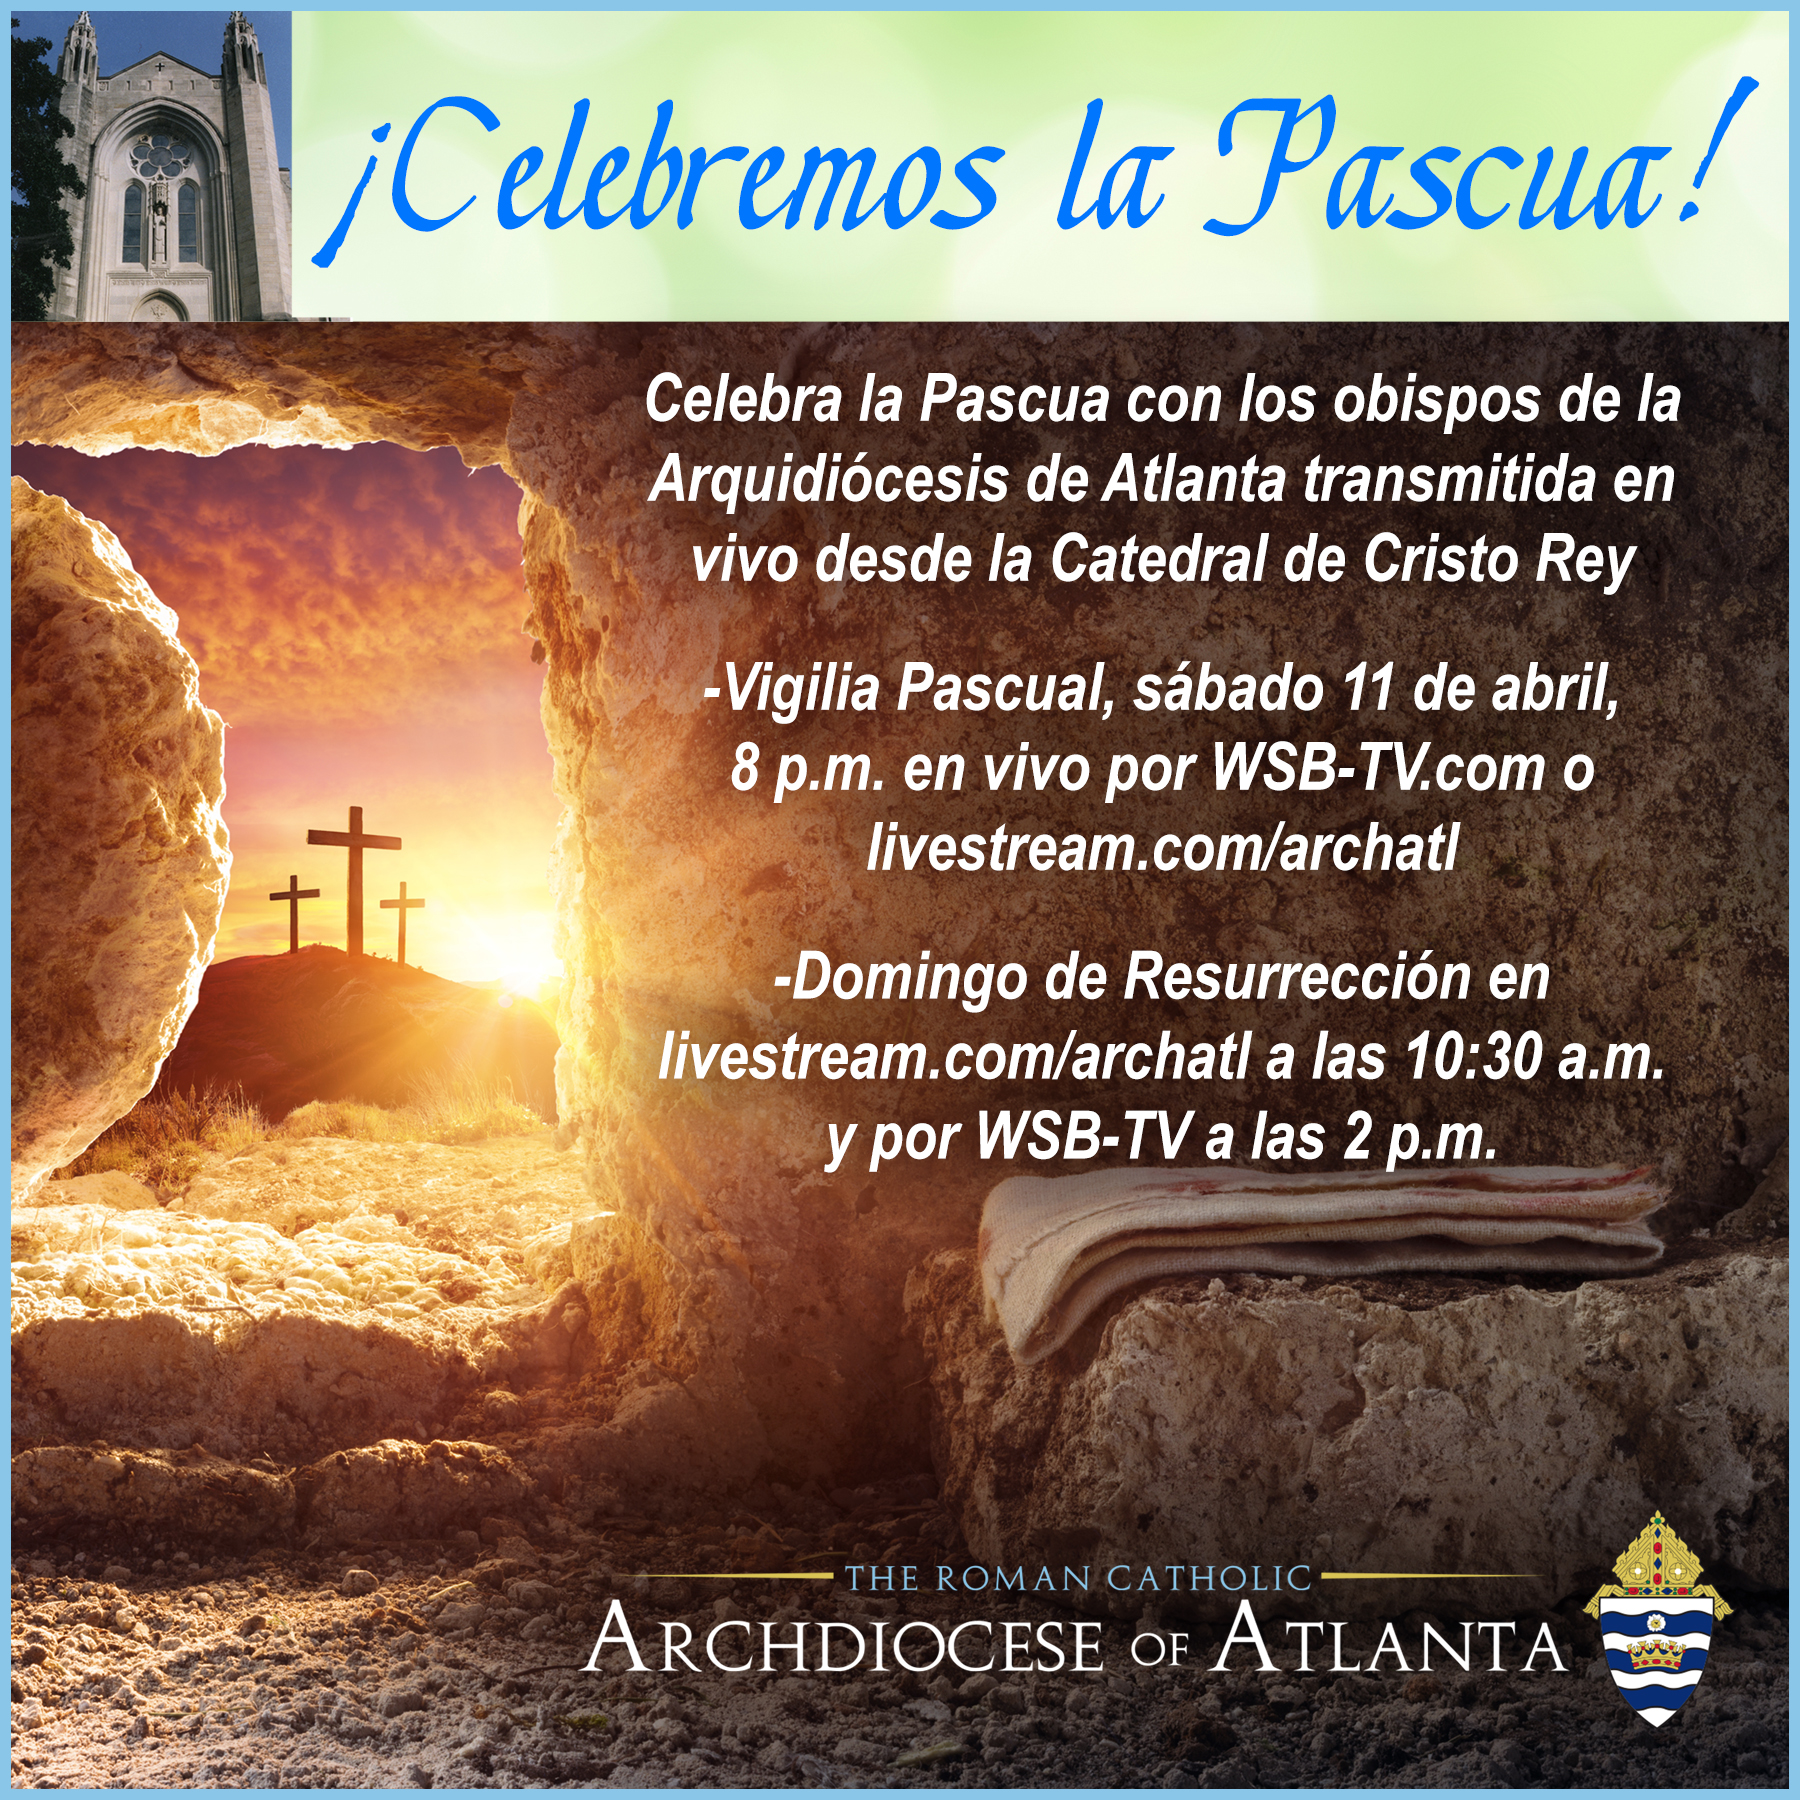 Semana Santa, Triduo y Pascua - Roman Catholic Archdiocese of Atlanta |  Atlanta, GA